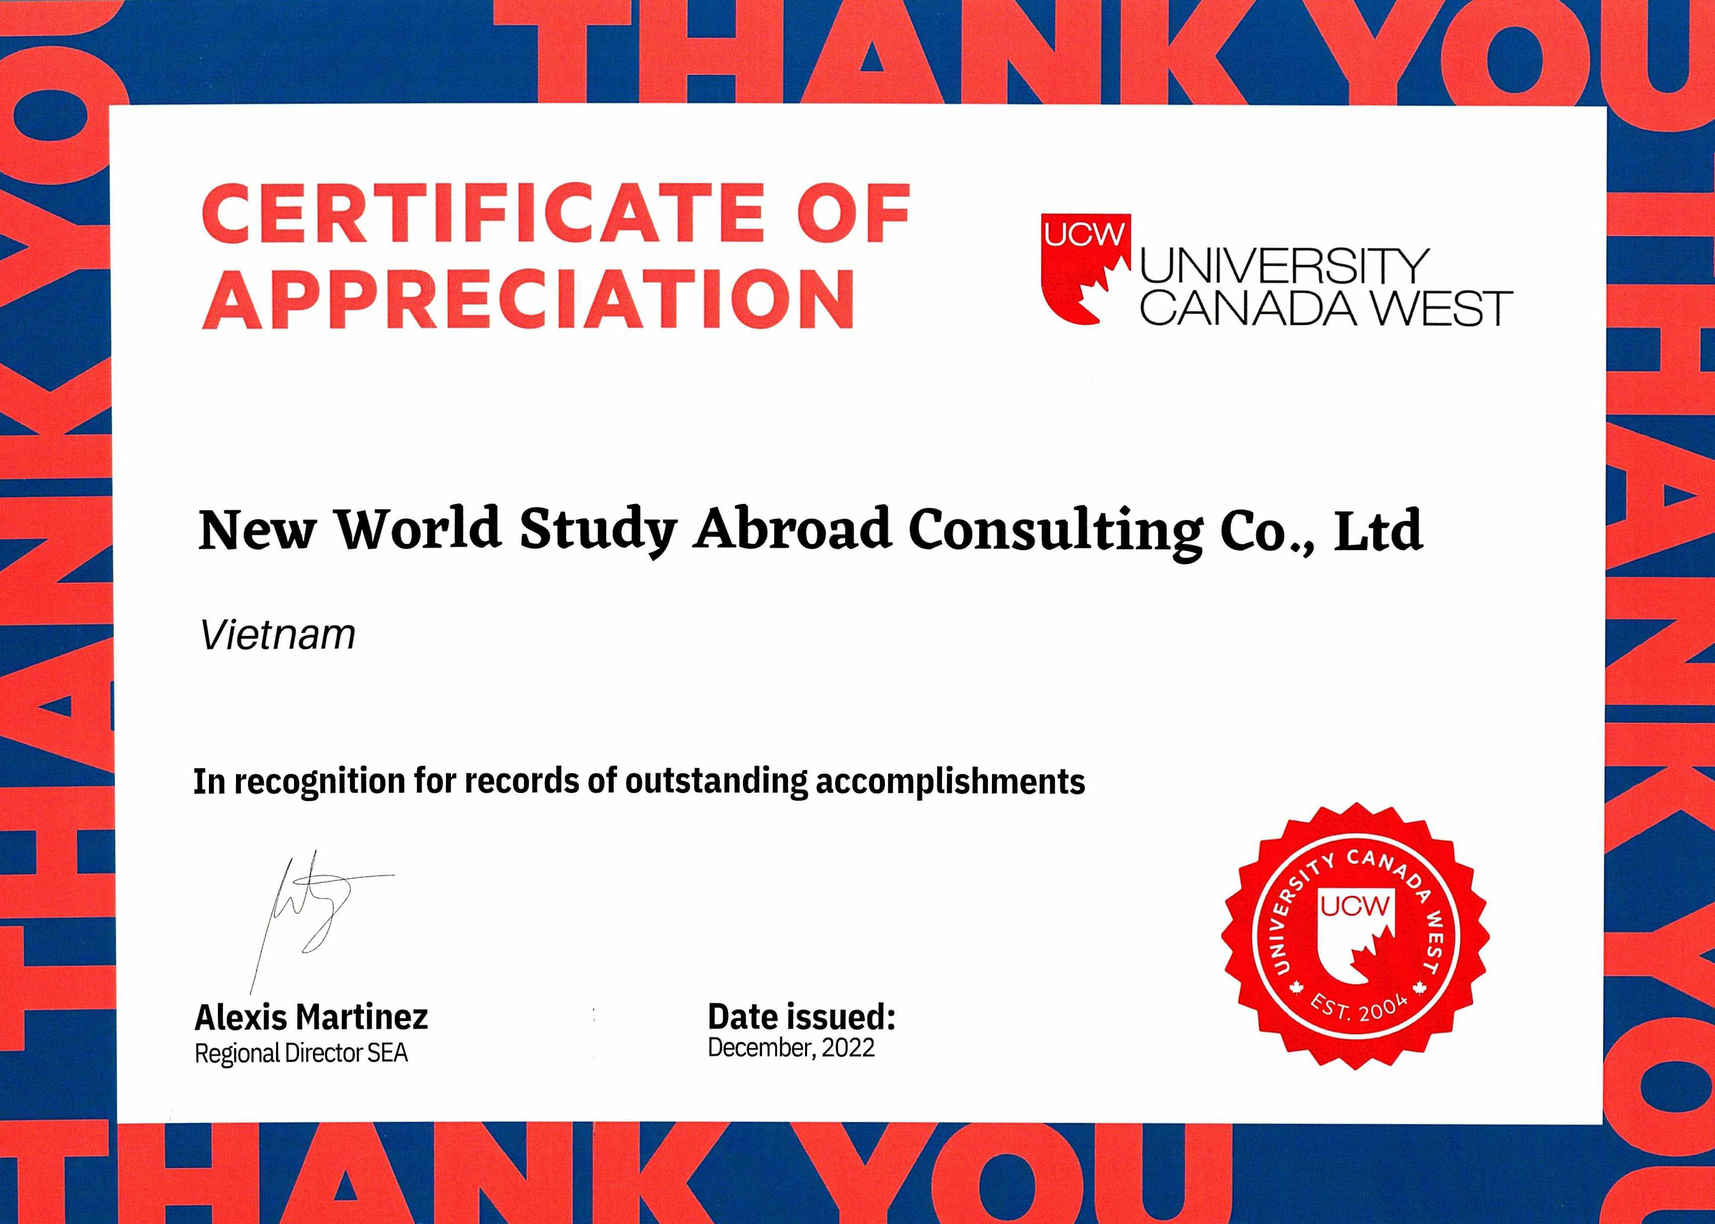 Certificate of Appreciation - University of Canada West, Canada